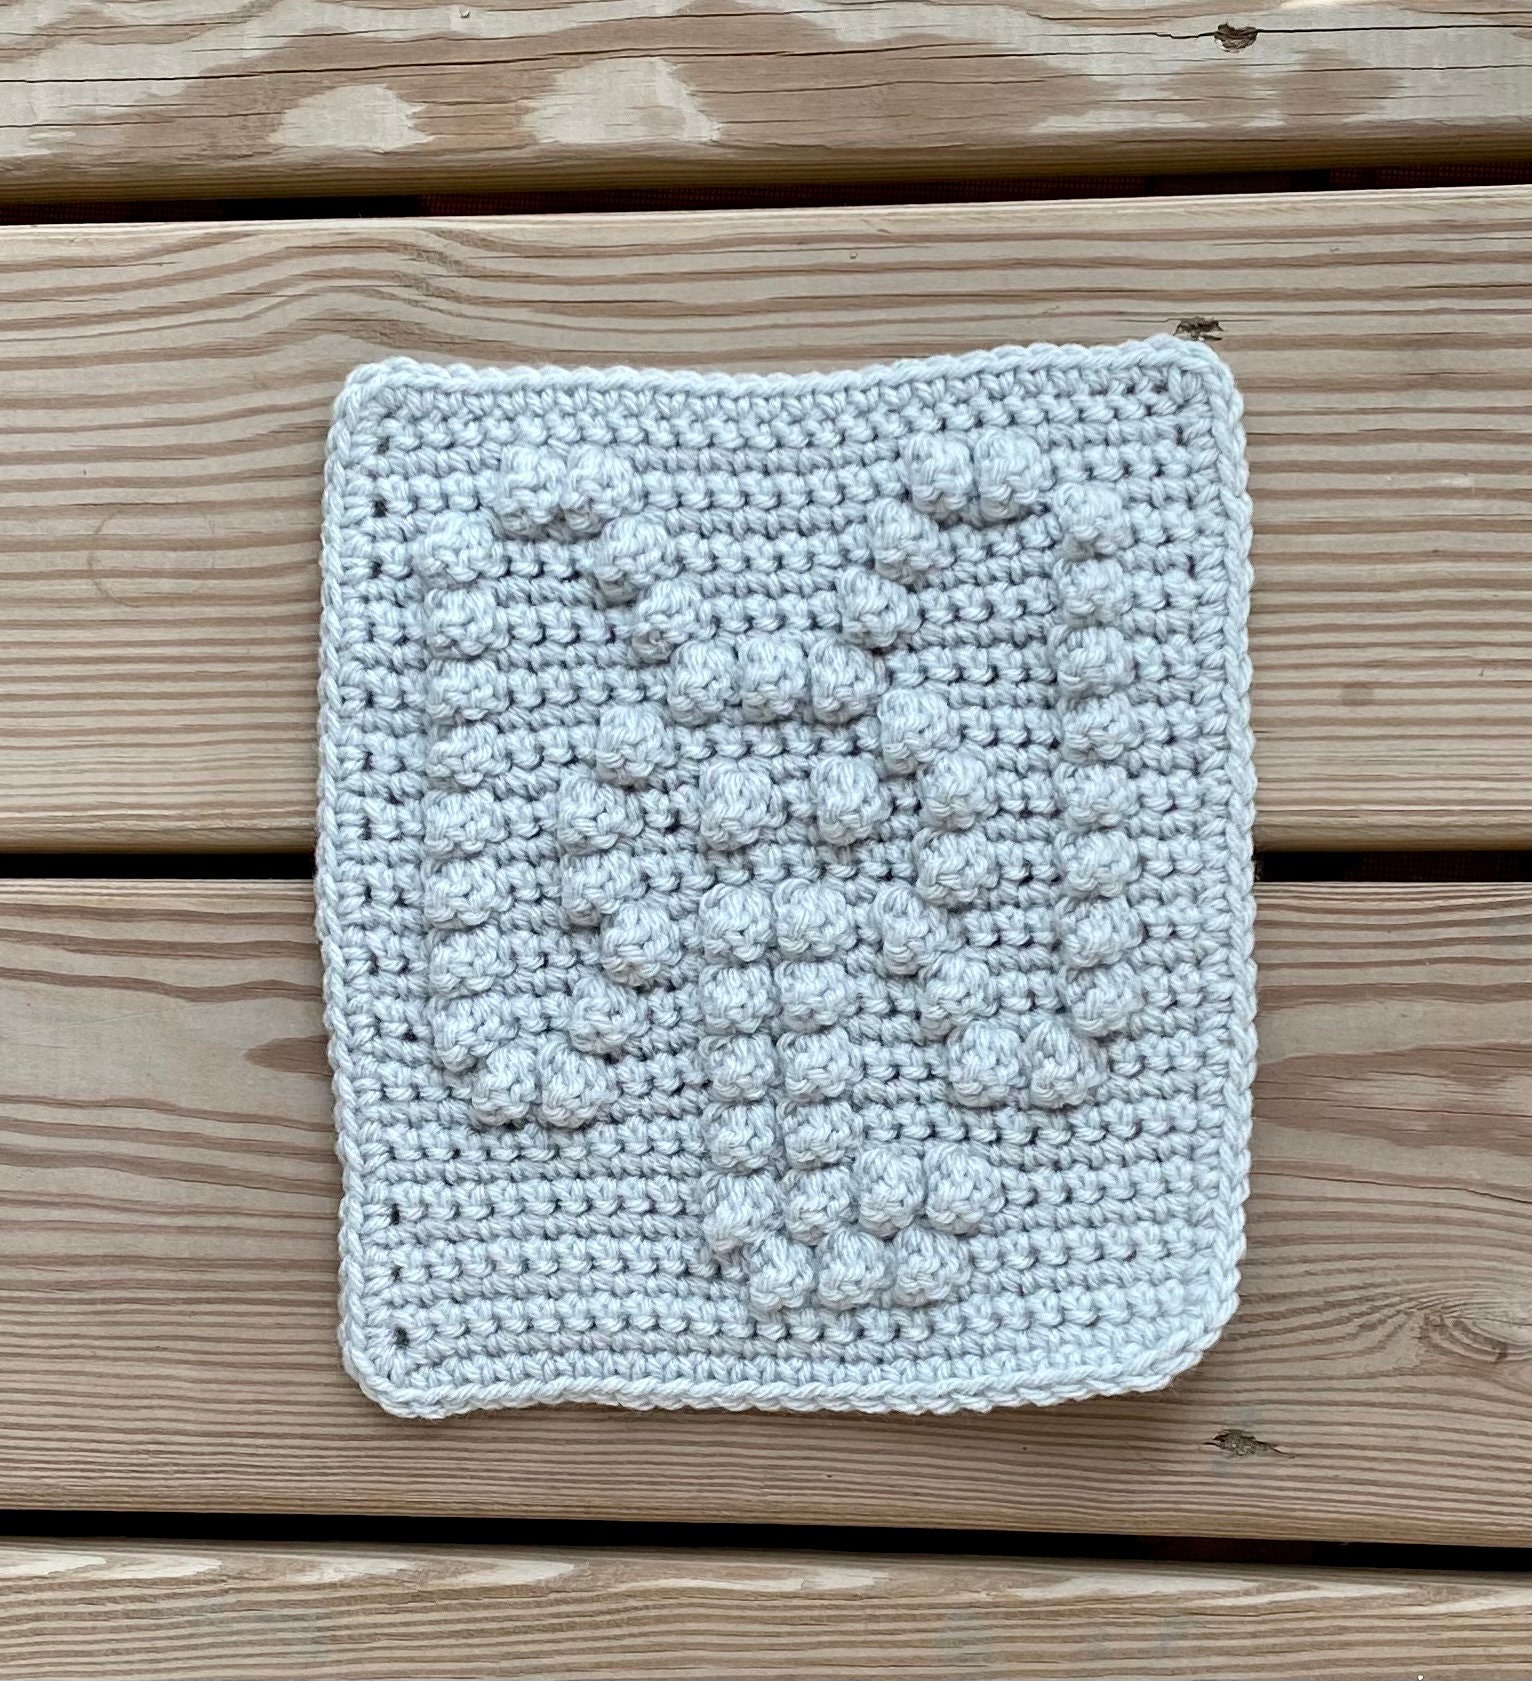 Crochet Semi Colon Pillow Pattern in Support of Mental Health Awareness -  Crochet Pillow